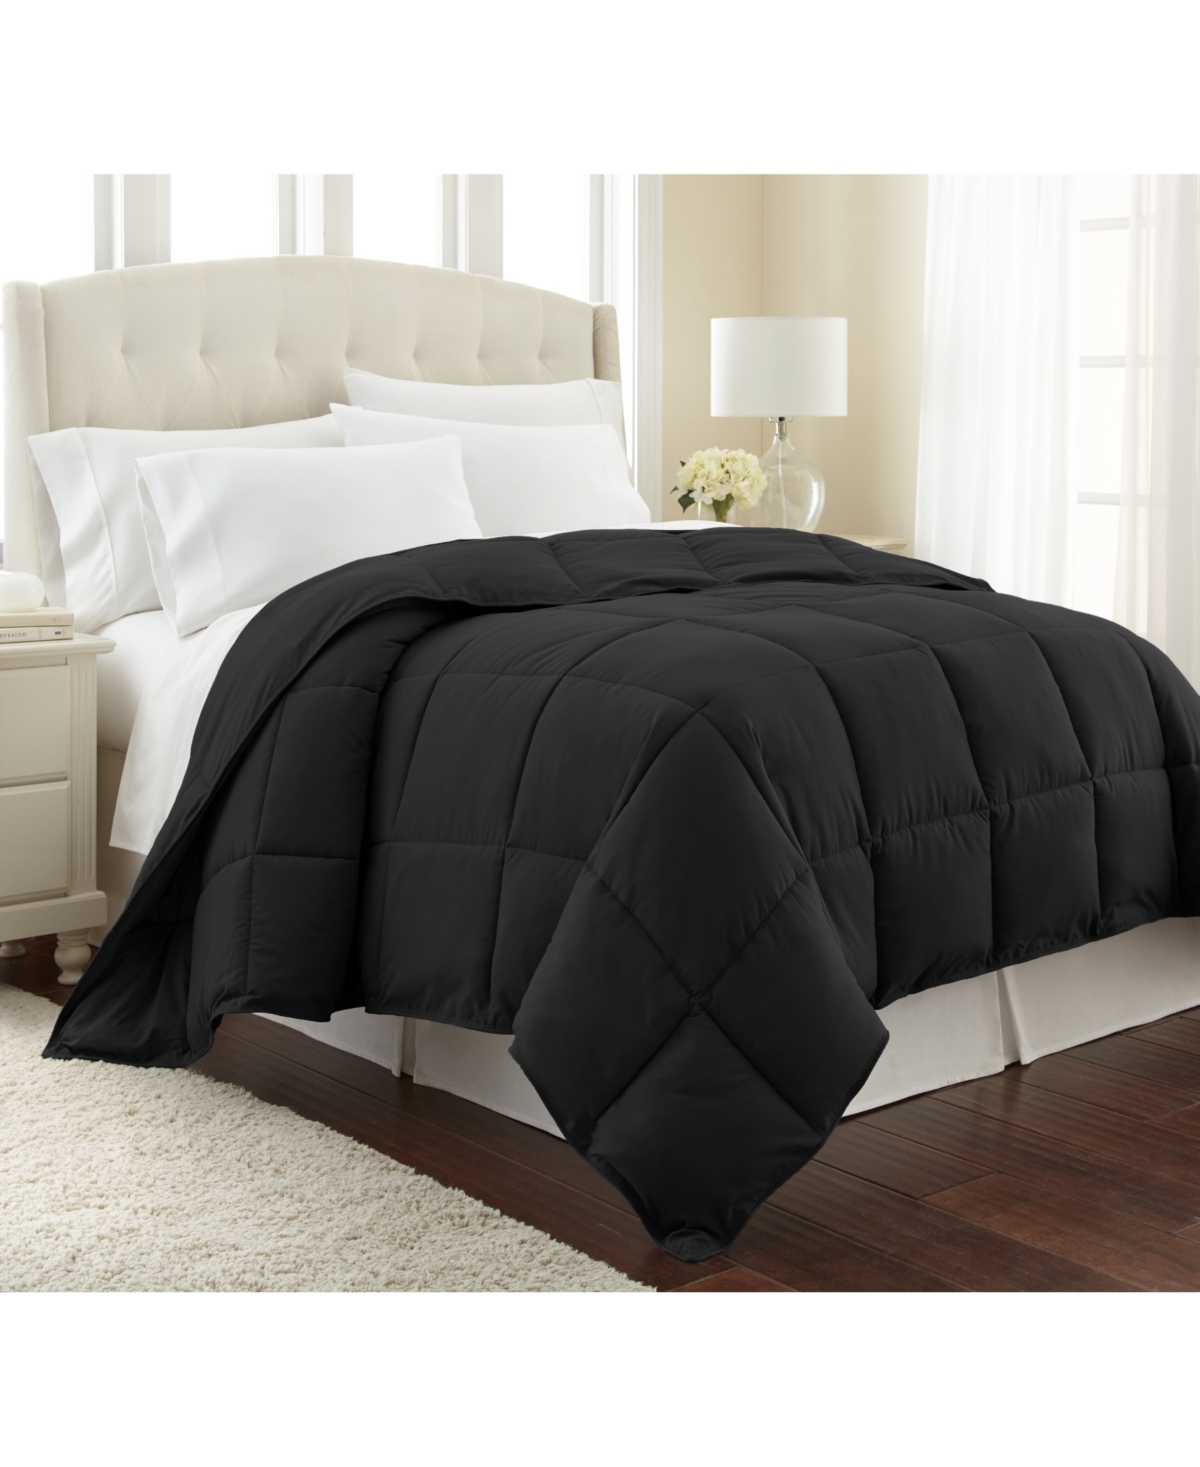 Southshore Fine Linens Premium Down Alternative Comforter, Full/queen In Black